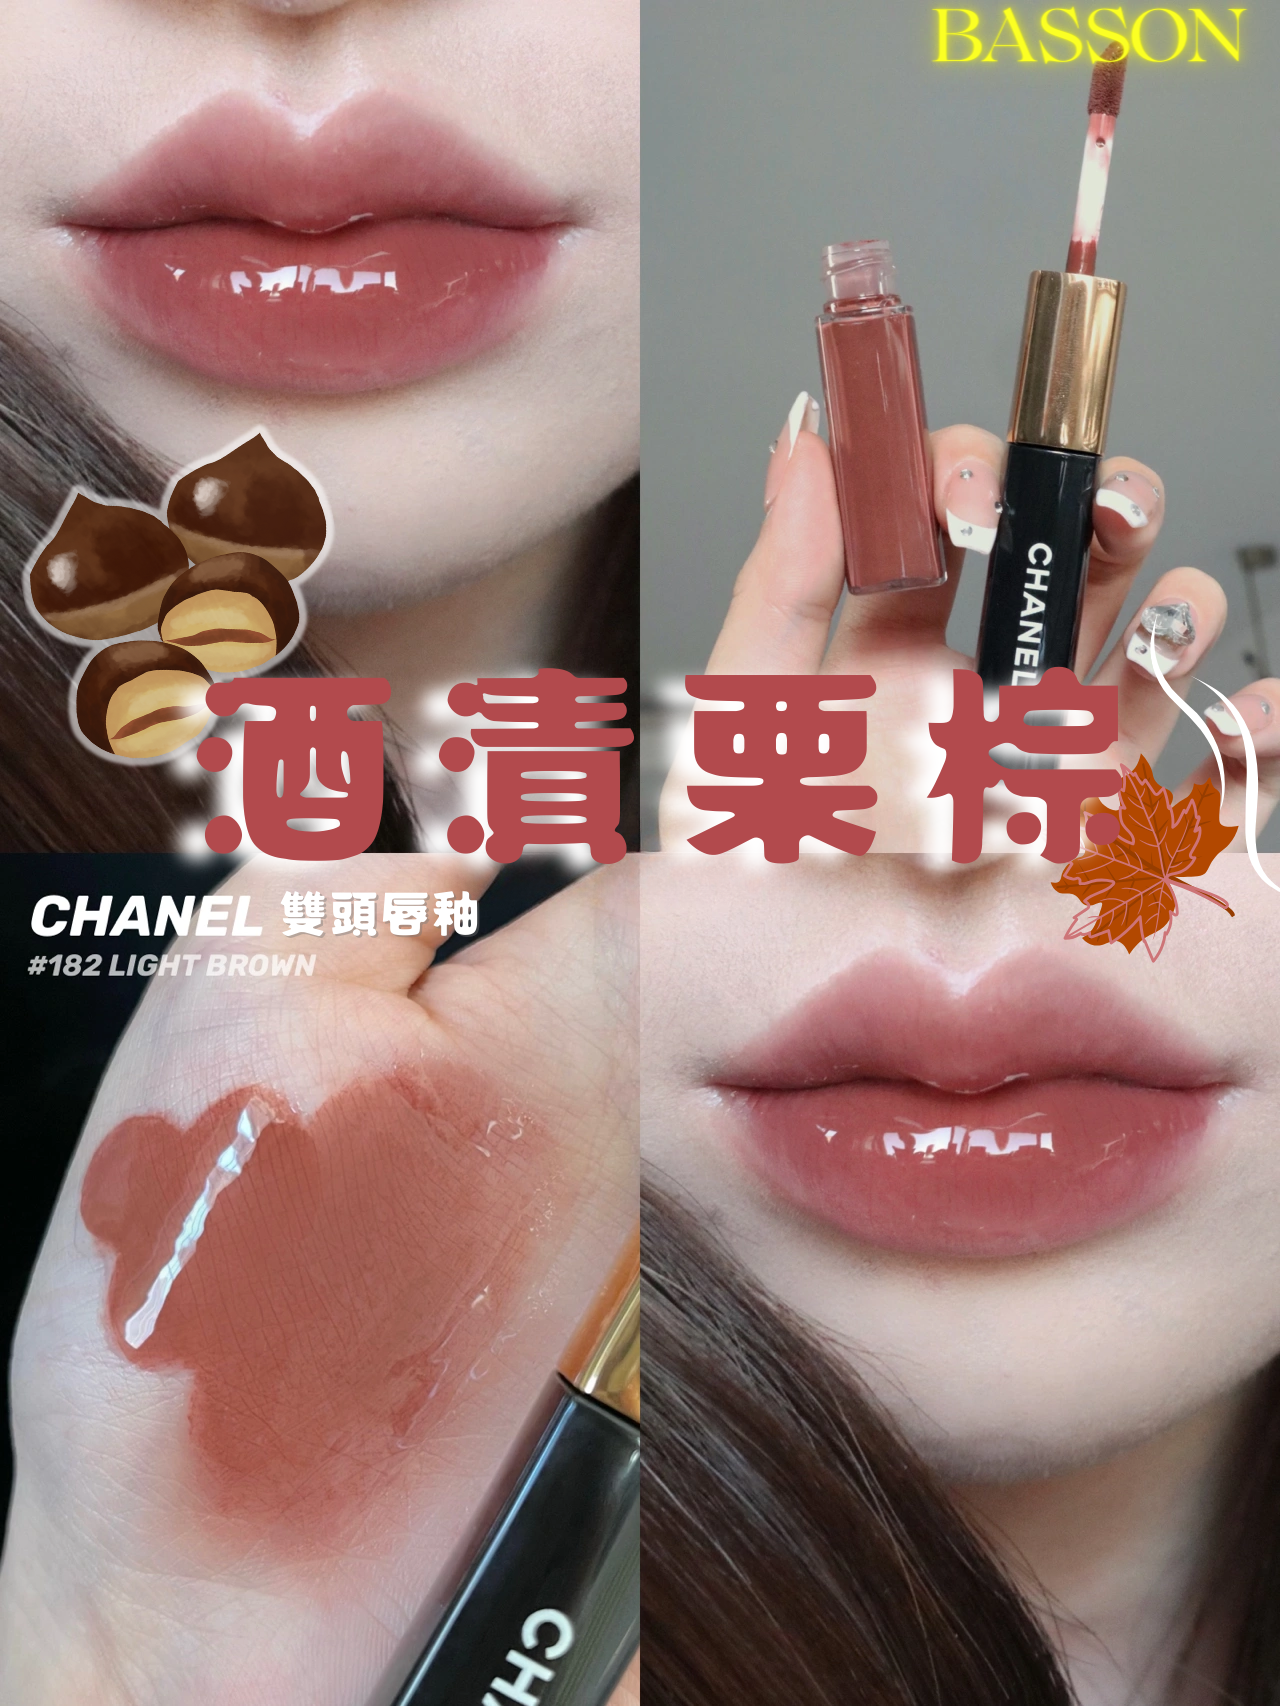 LE ROUGE DUO ULTRA TENUE Ultrawear liquid lip colour 184 - Intense brown, CHANEL